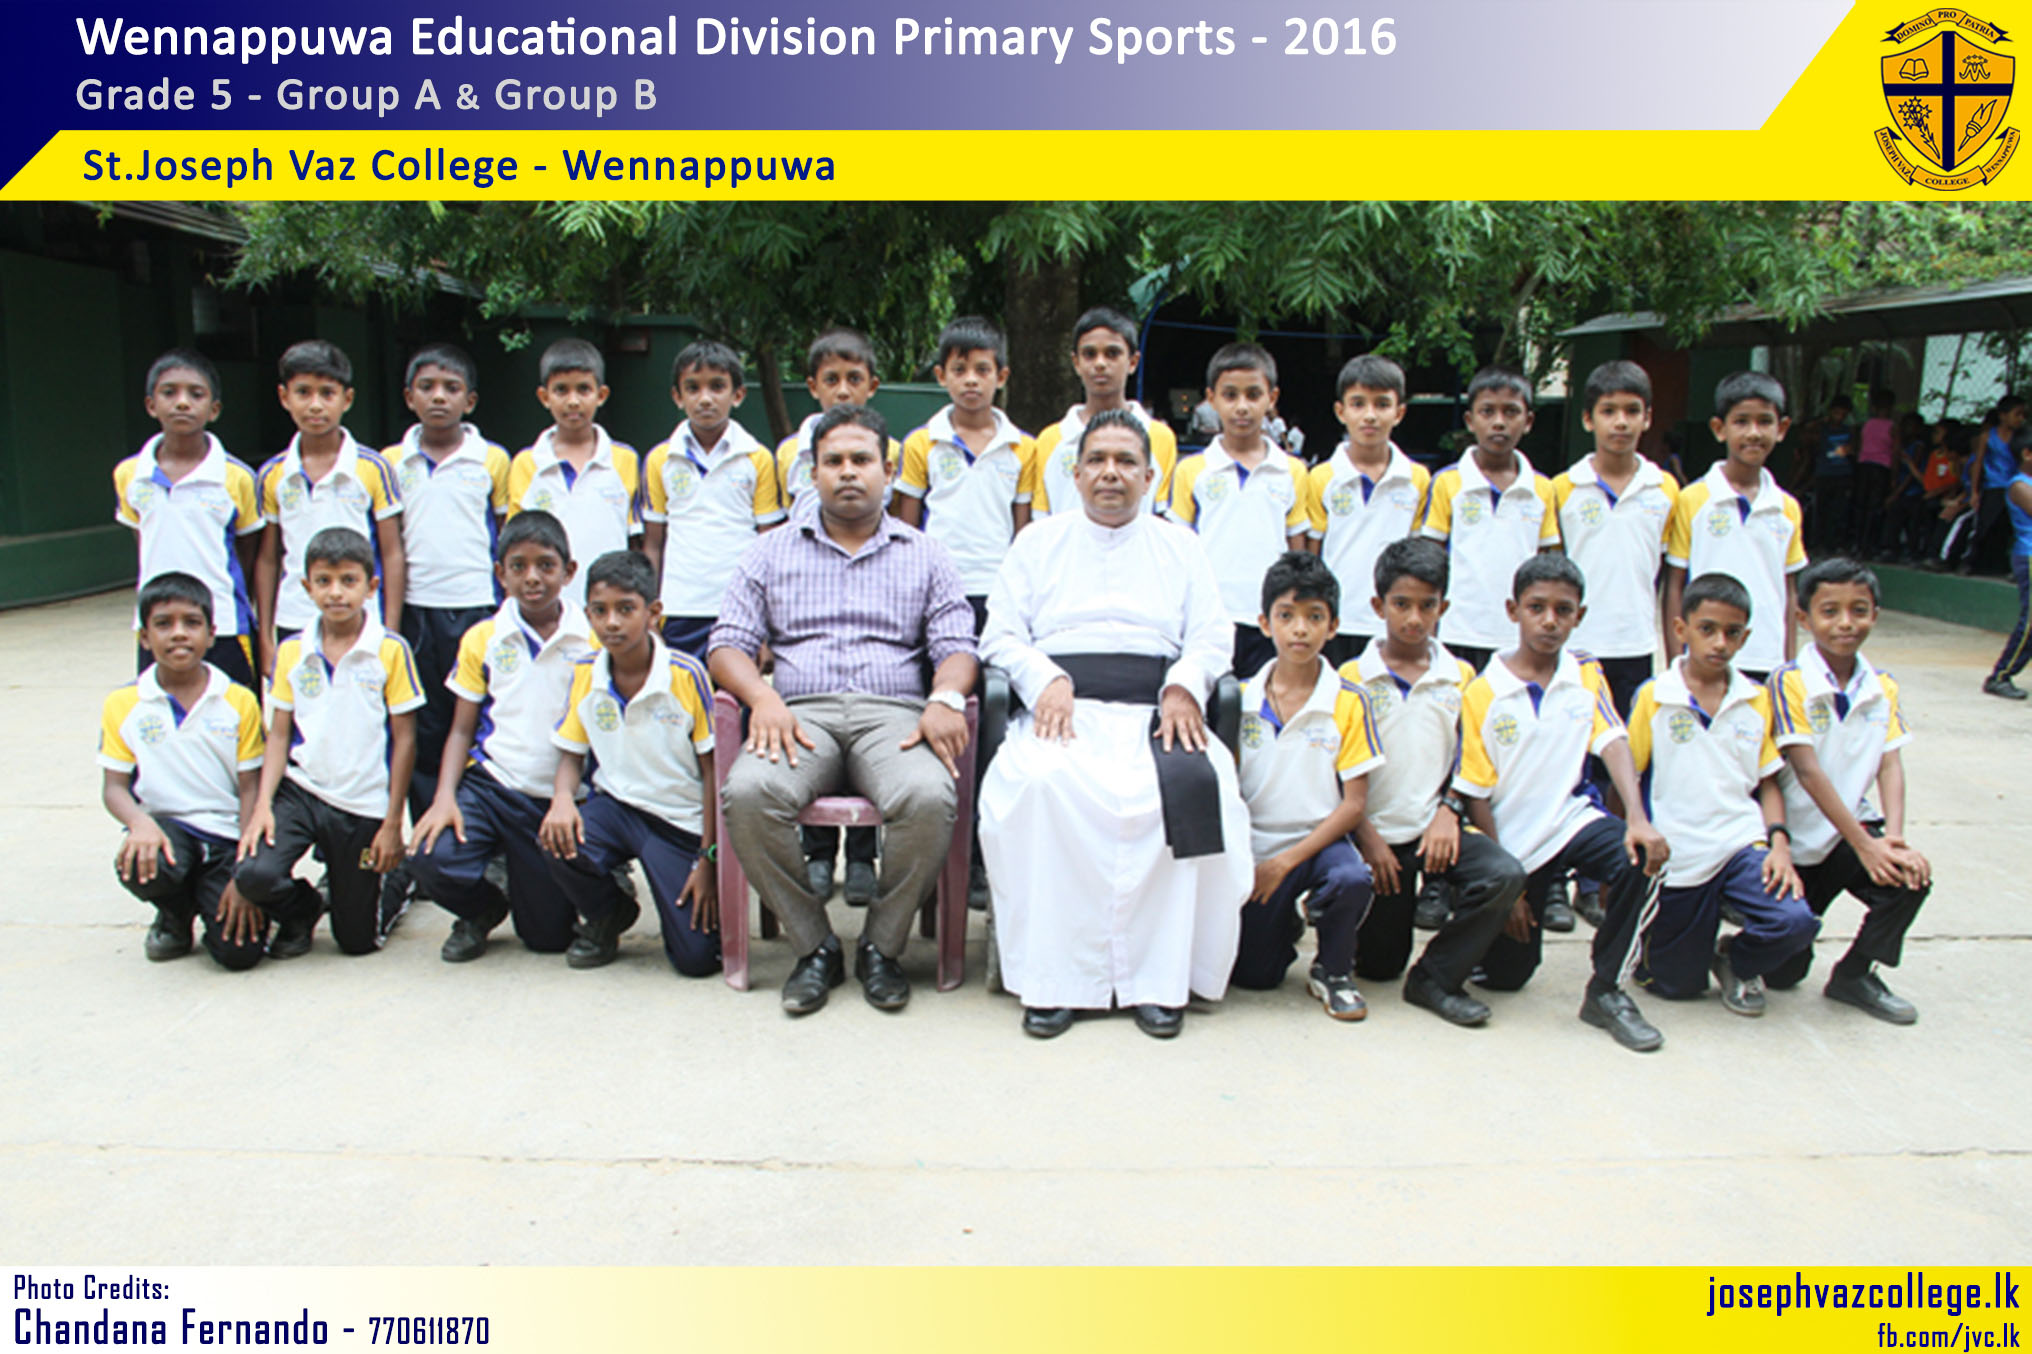 Wennappuwa Educational Division Primary Sports Champions - 2016 - St.Joseph Vaz College - Wennappuwa